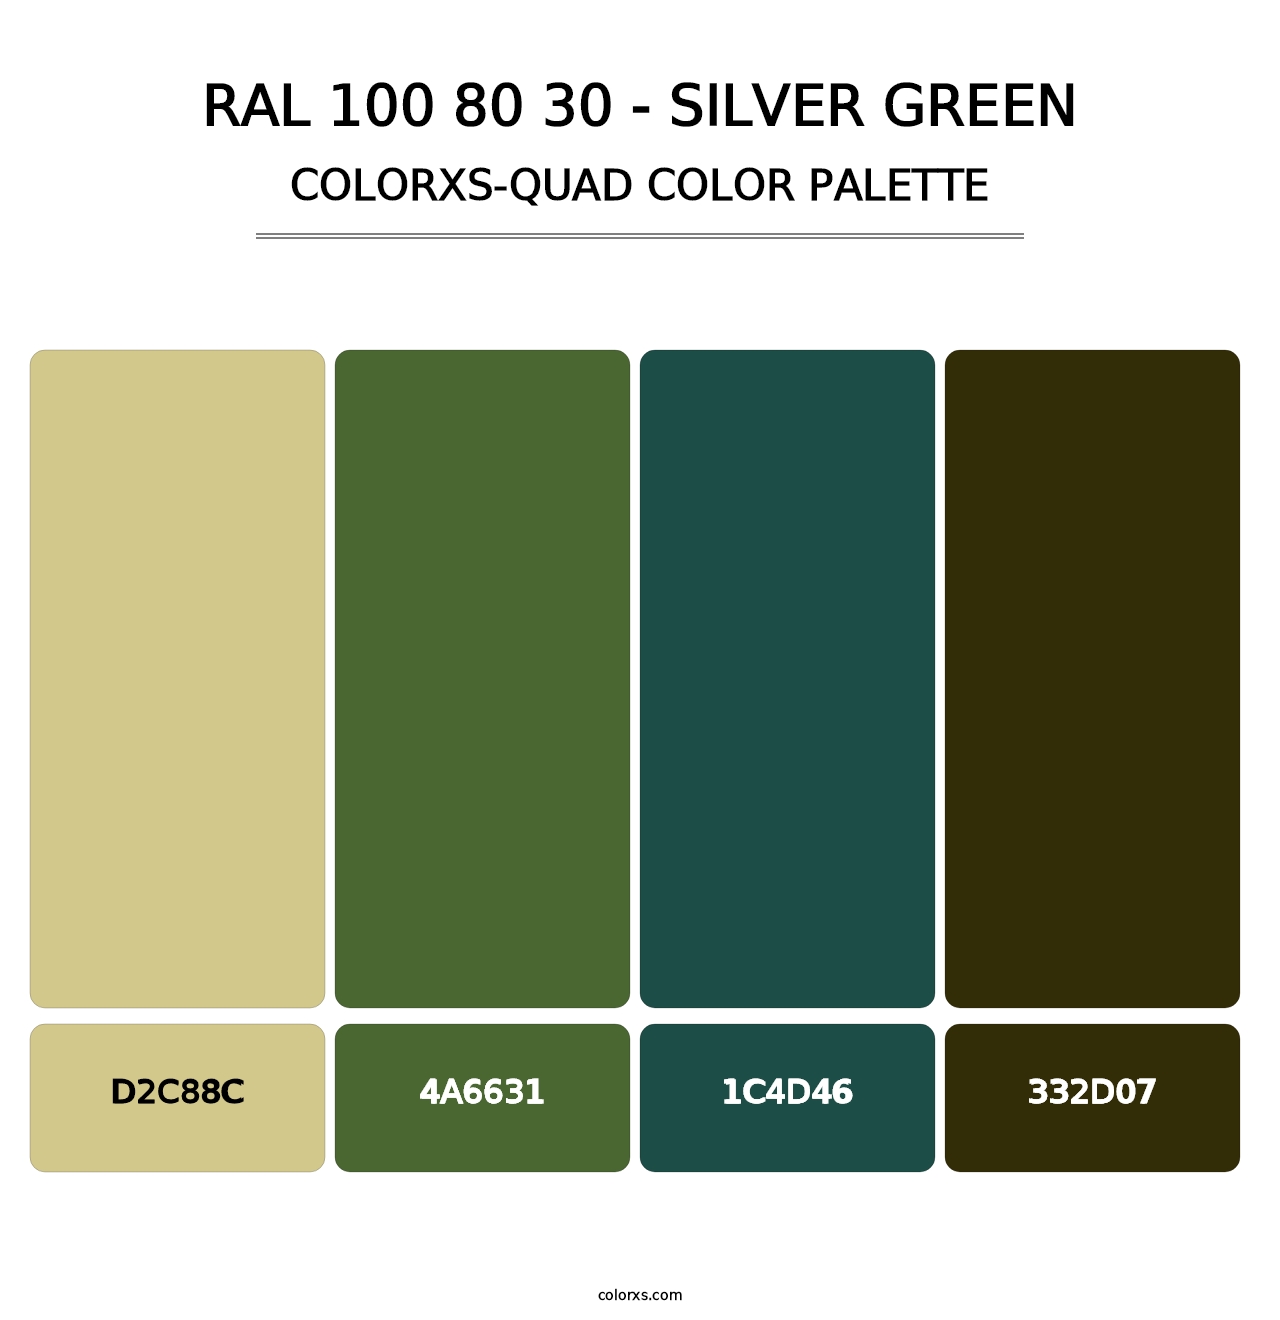 RAL 100 80 30 - Silver Green - Colorxs Quad Palette